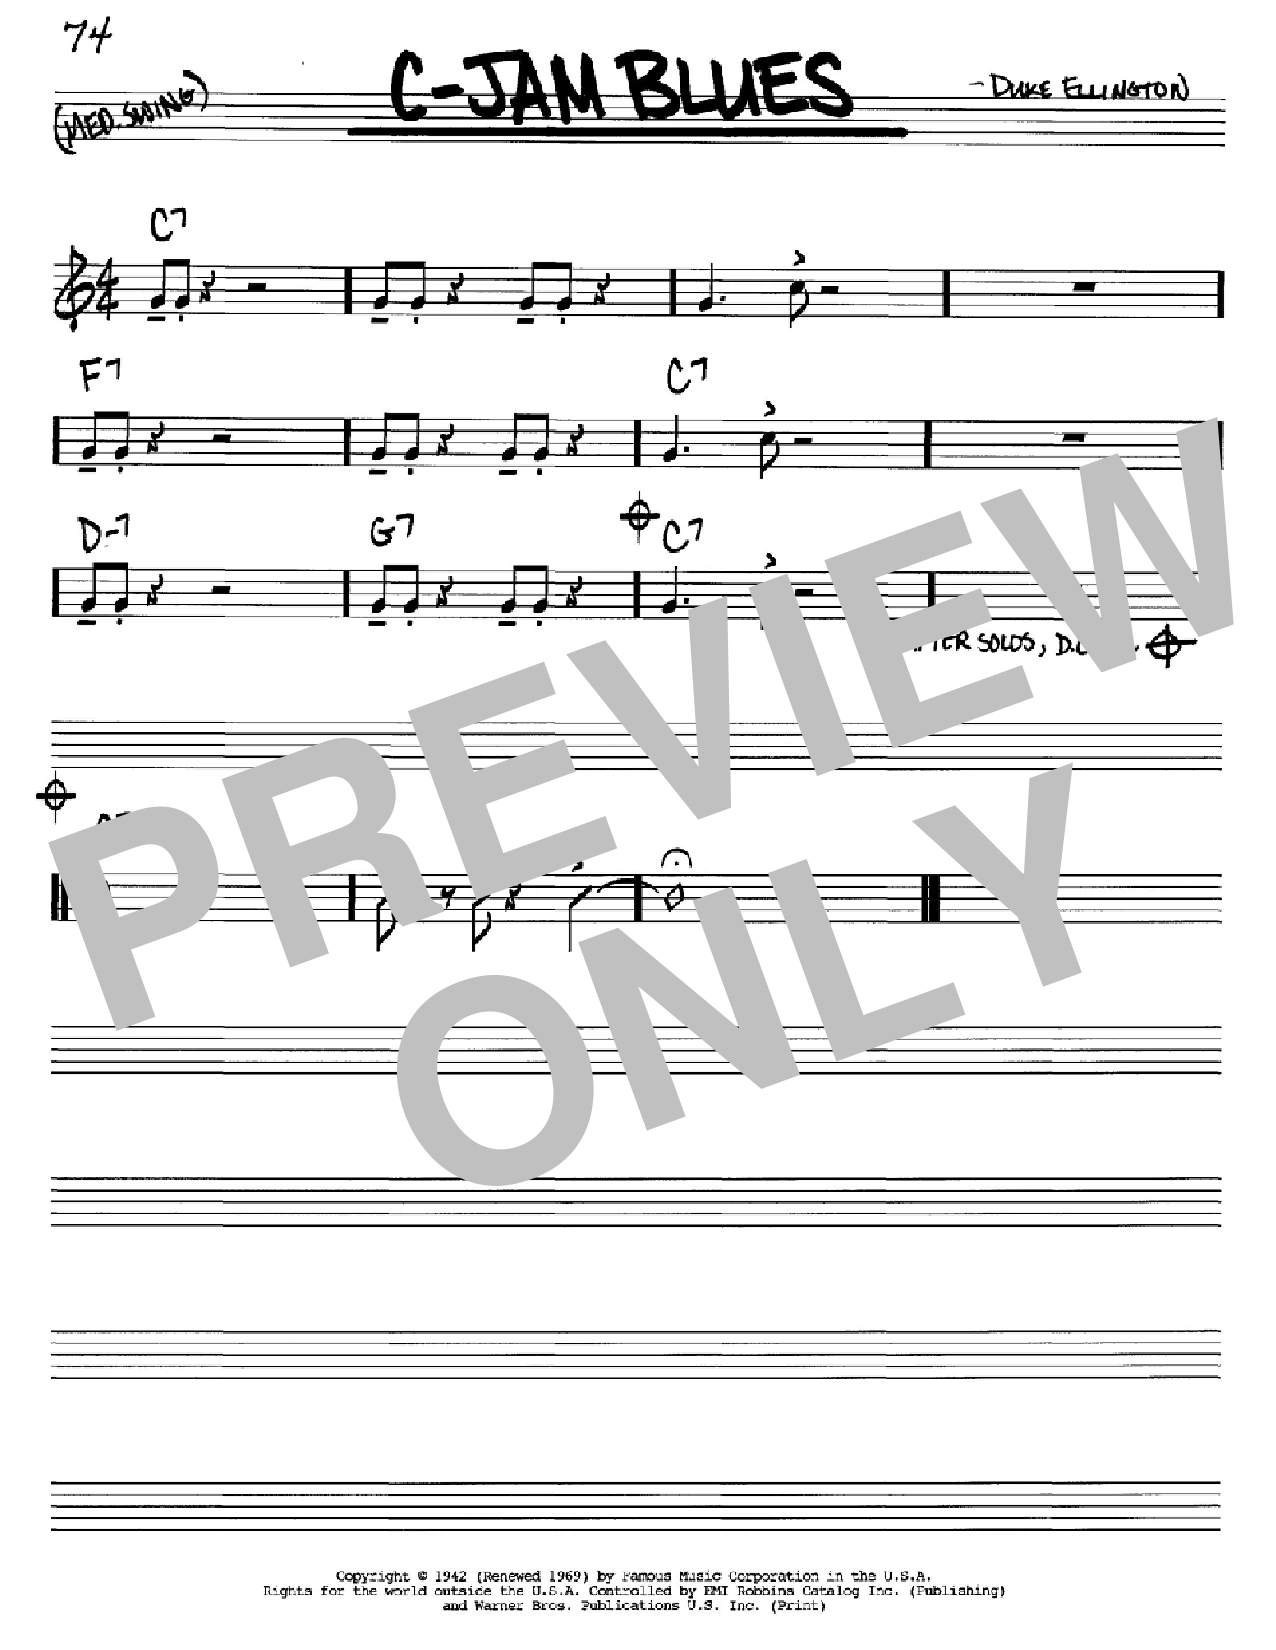 Duke Ellington C-Jam Blues Sheet Music Notes & Chords for Piano Solo - Download or Print PDF